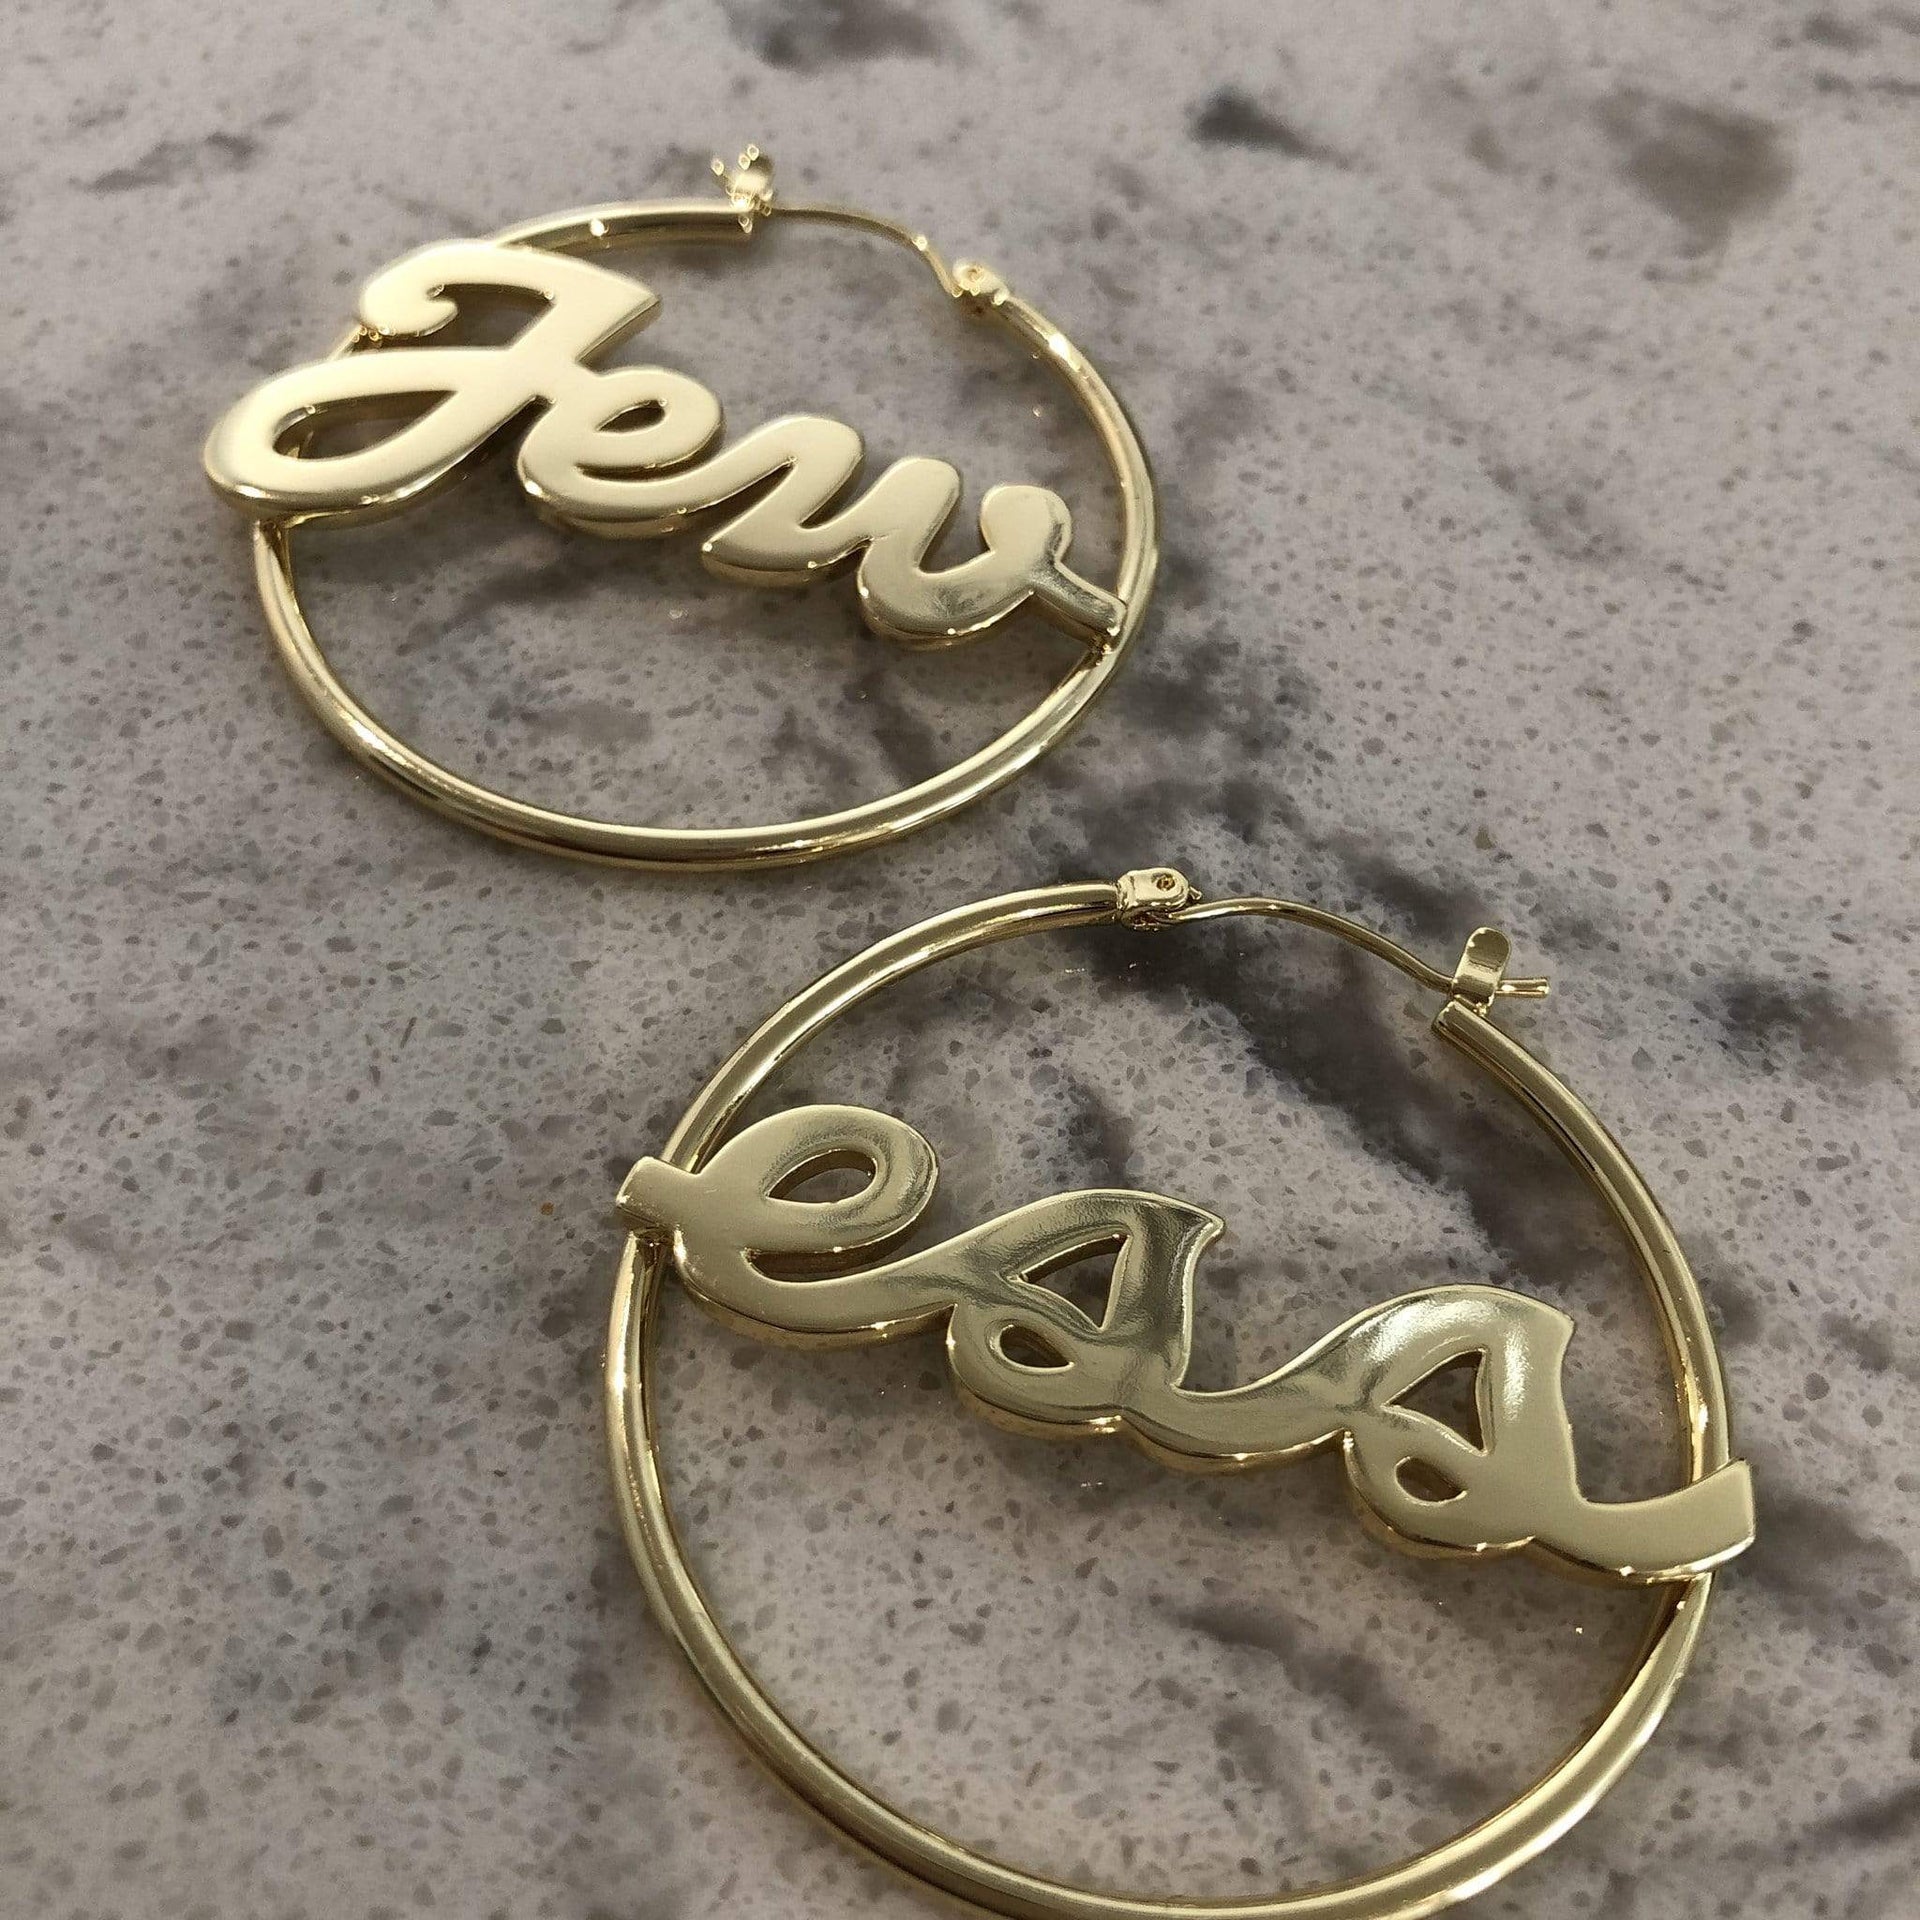 2Jewesses Designs Earrings Gold Jewess Hoop Earrings - 14k Gold